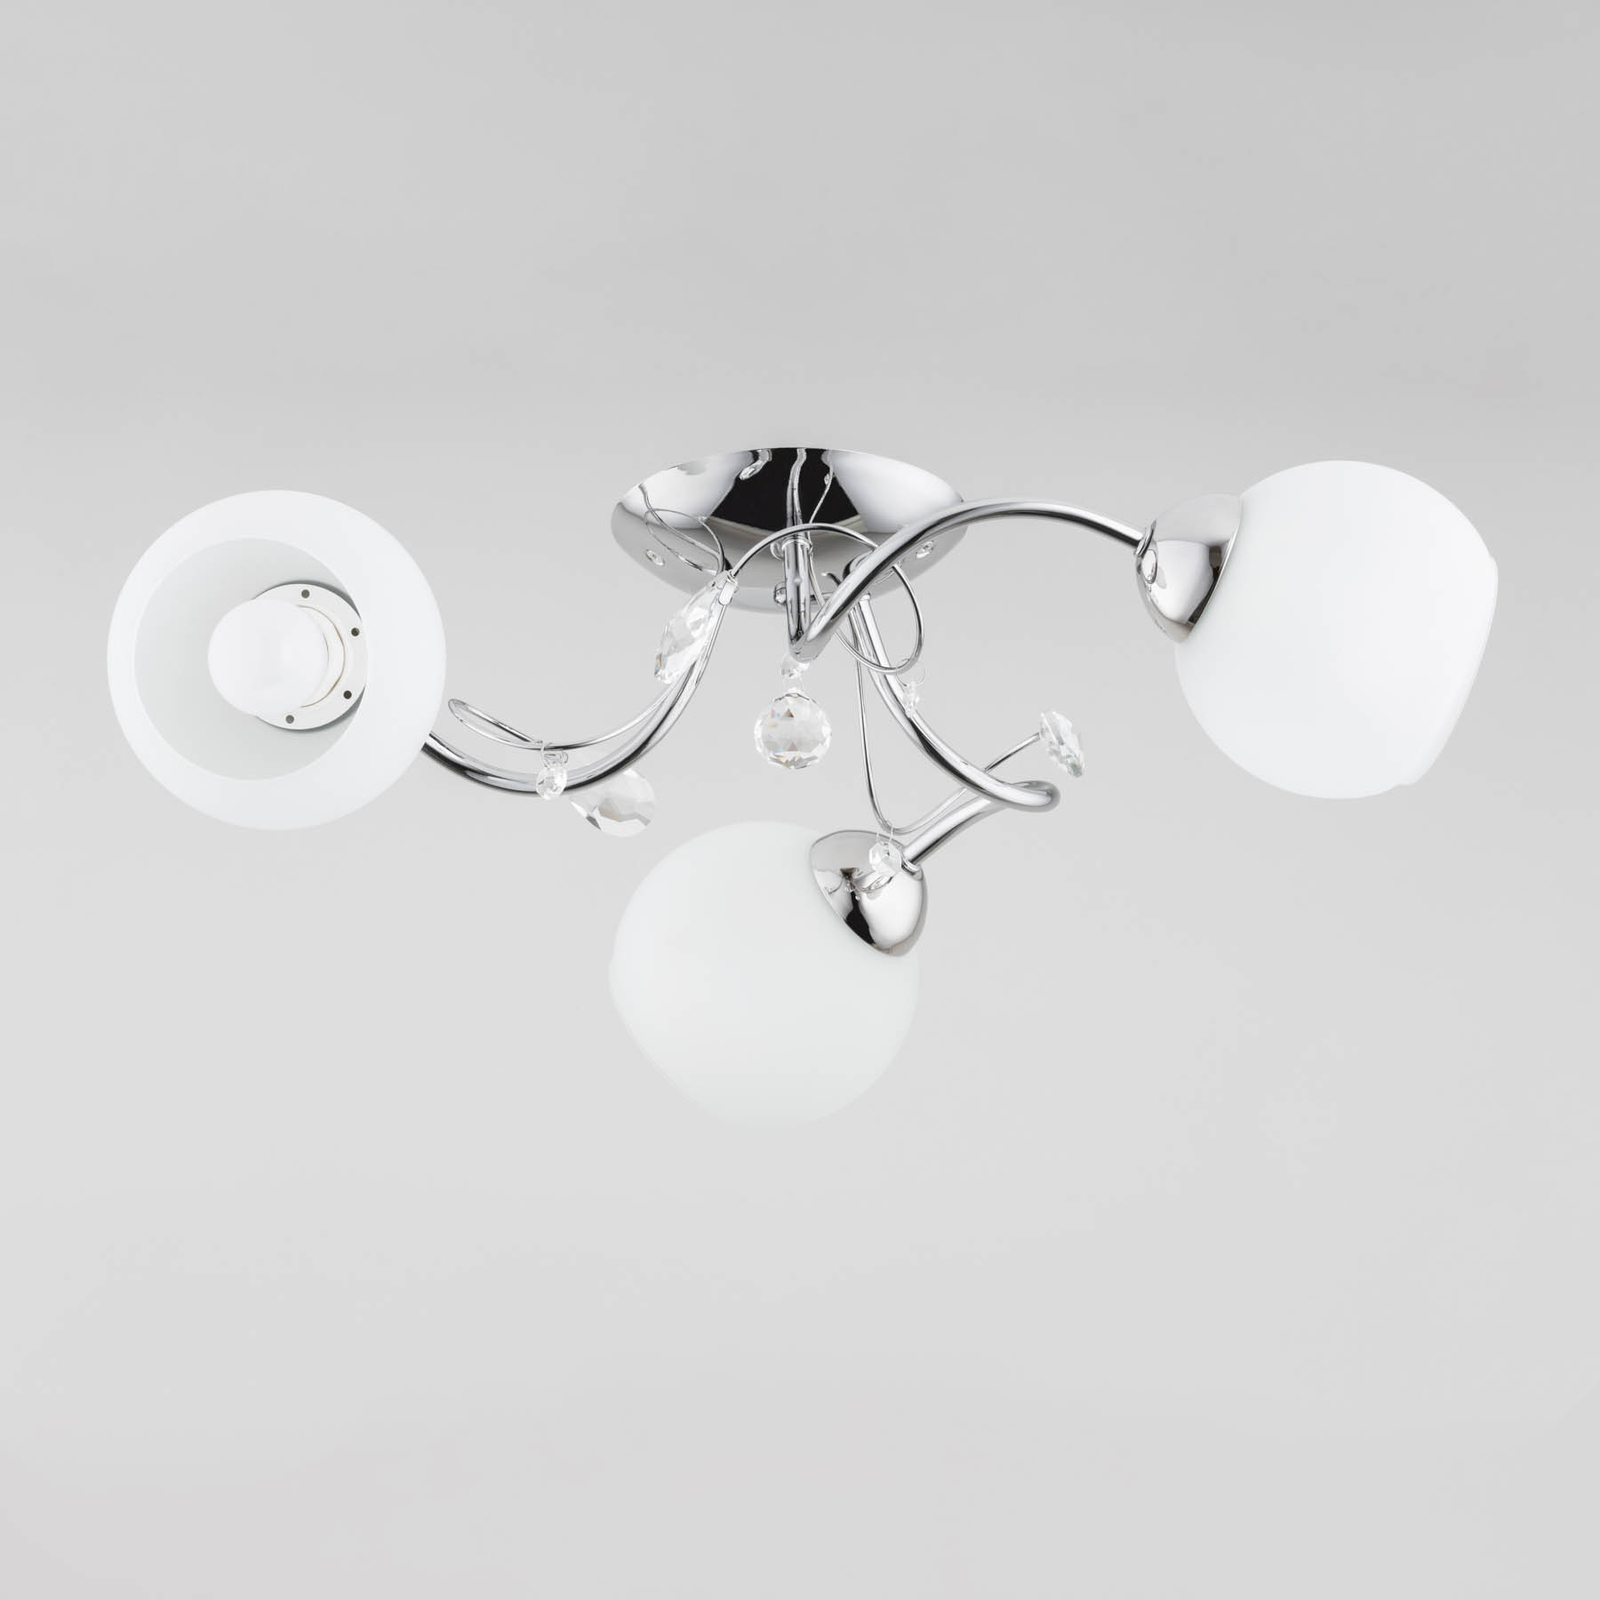 Livia Pro ceiling light, chrome/white, three-bulb